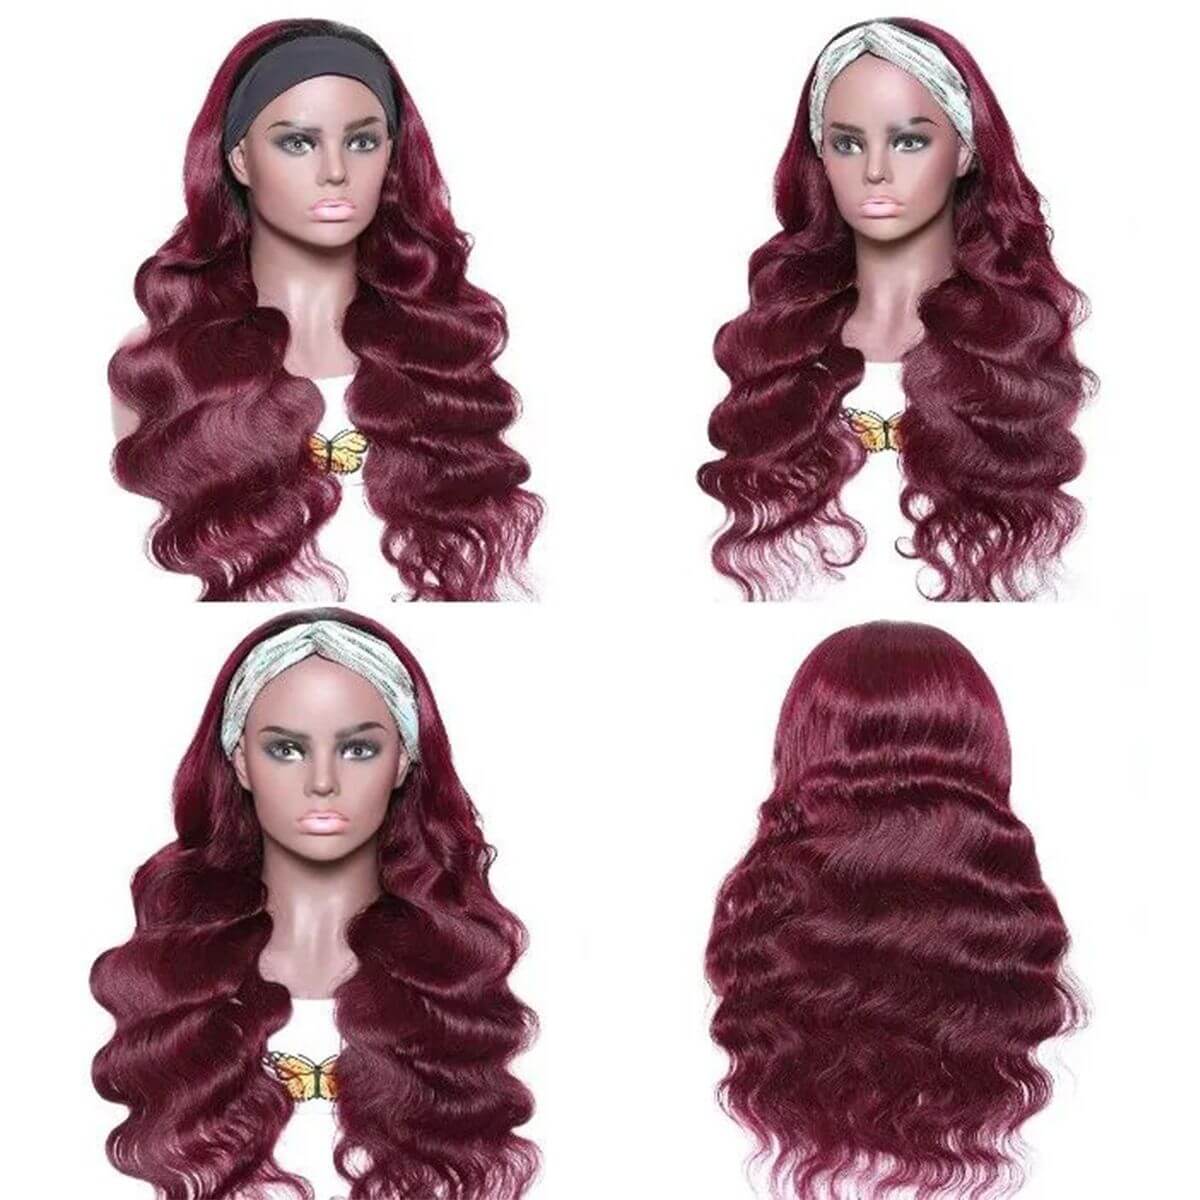 99j headband wig,burgundy color headhand wig,body 99j headband wigs,body wave 99j headband wig,best headband wigs,cheap headband wigs,full machine made wigs